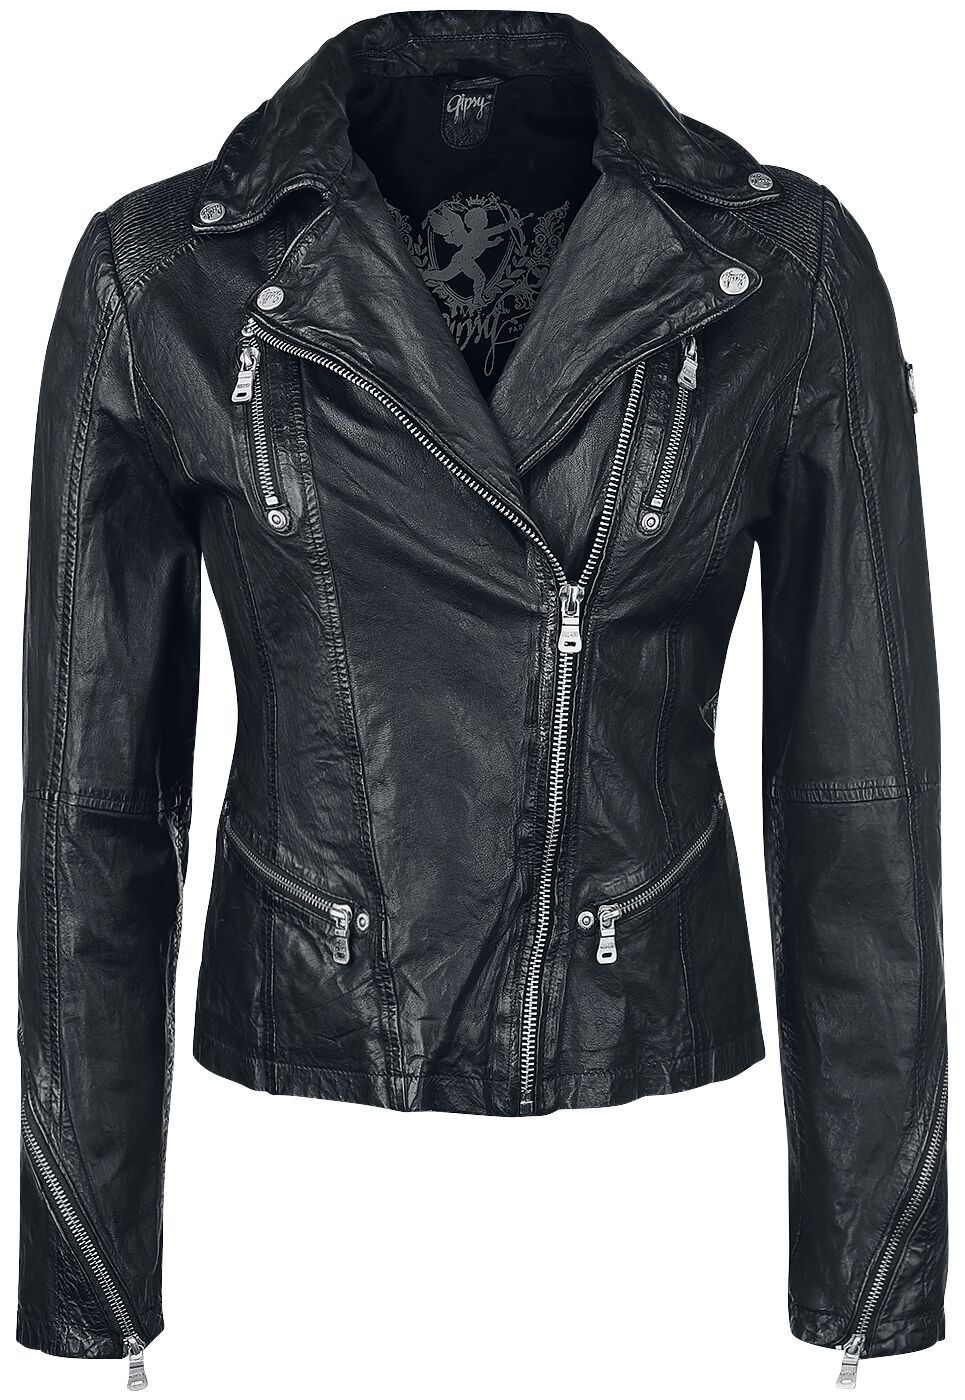 Happy Silver | Gipsy Leather Jacket EMP